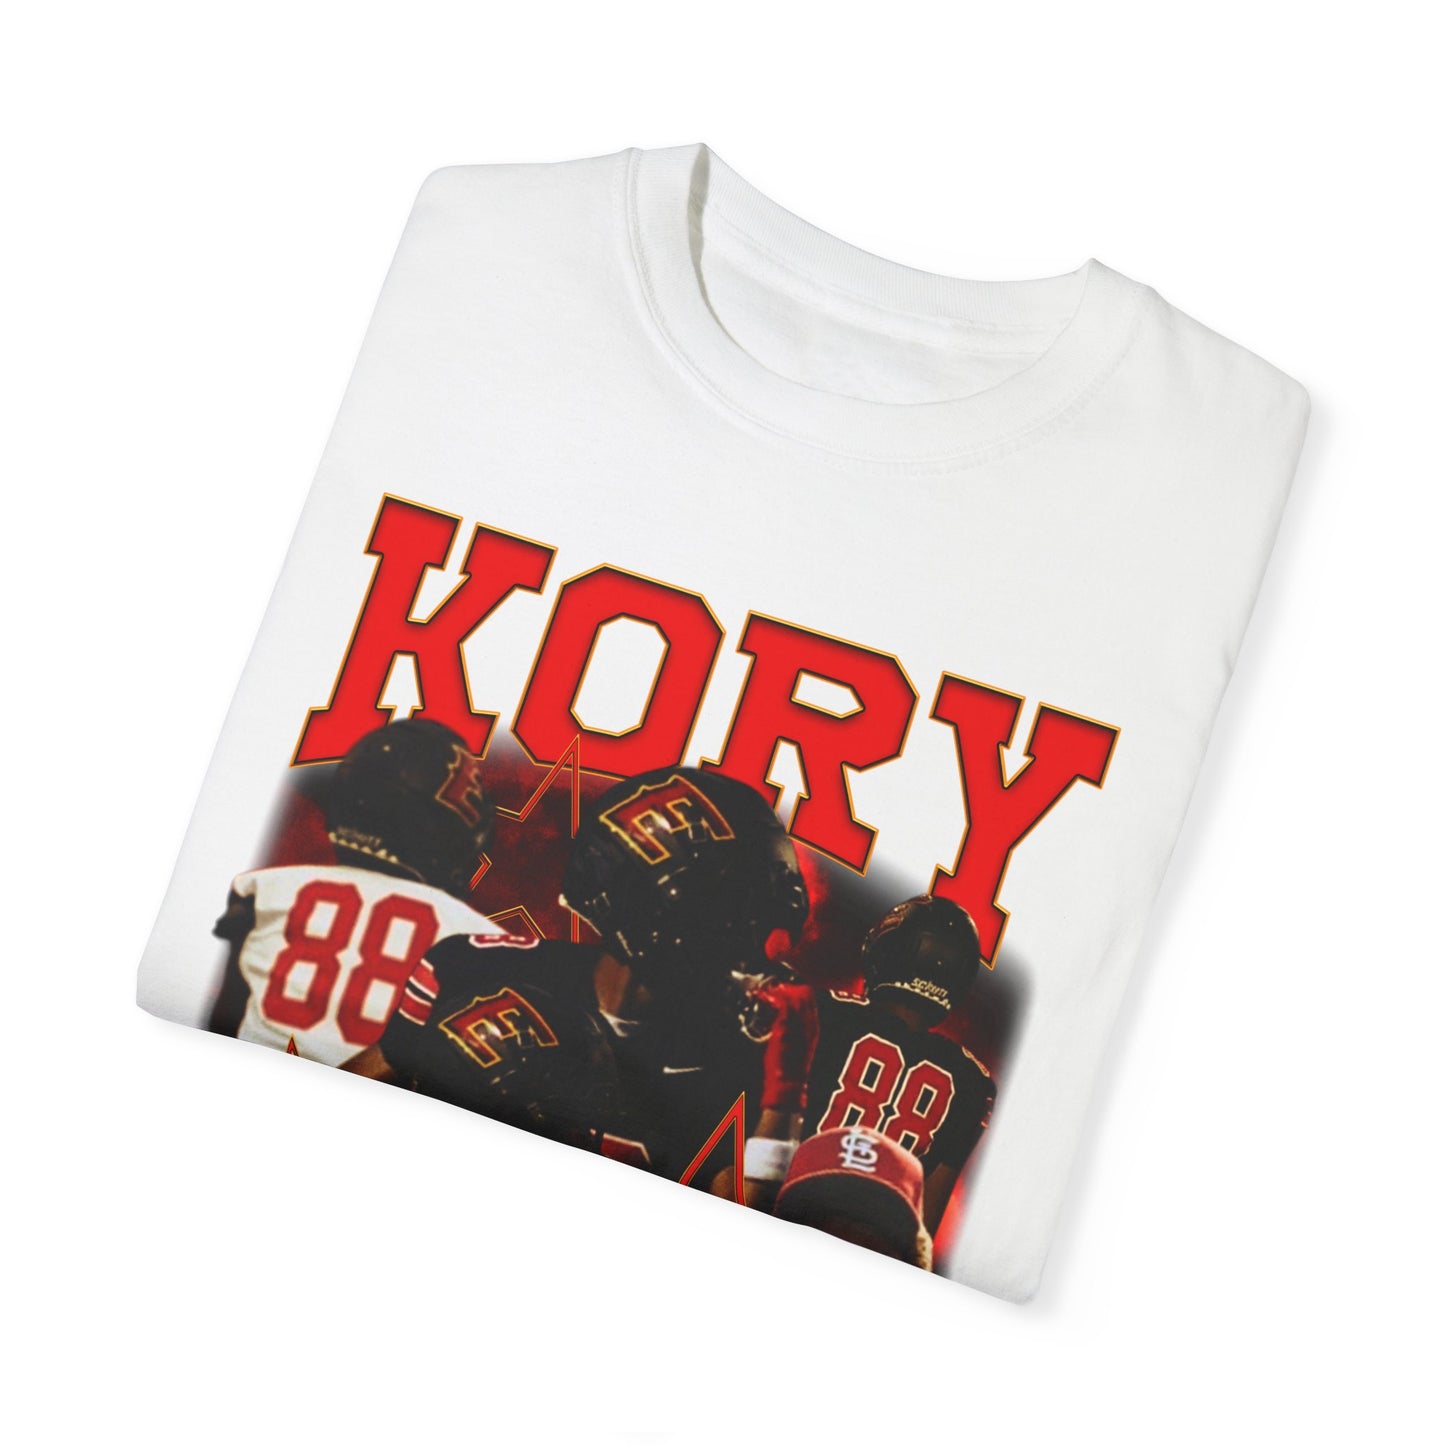 Kory Keshon White Graphic T-shirt